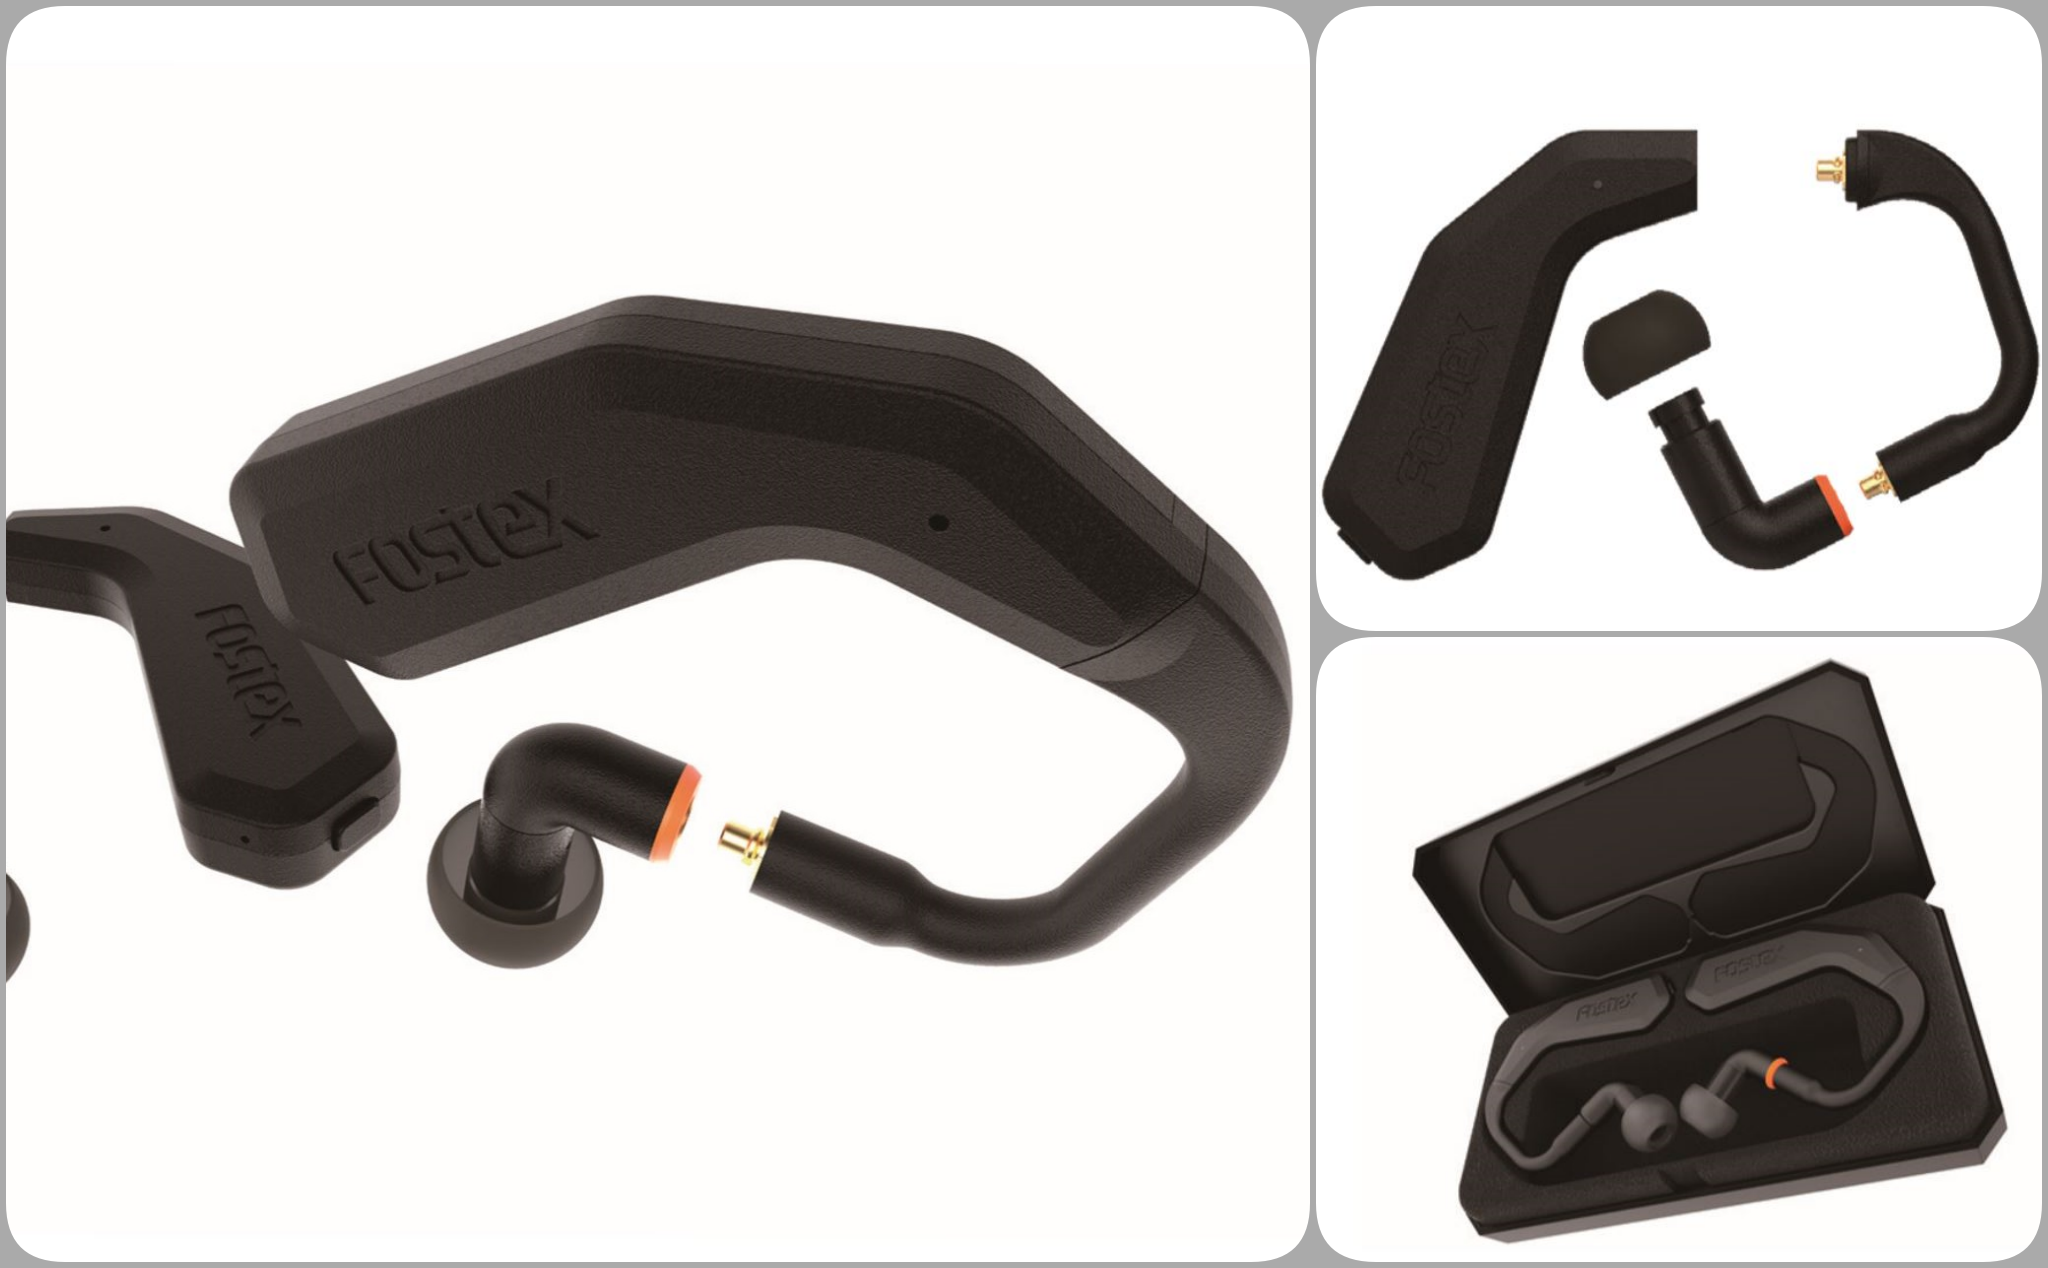 Fostex TM2 - module biến các tai nghe in-ear cao cấp thành true wireless